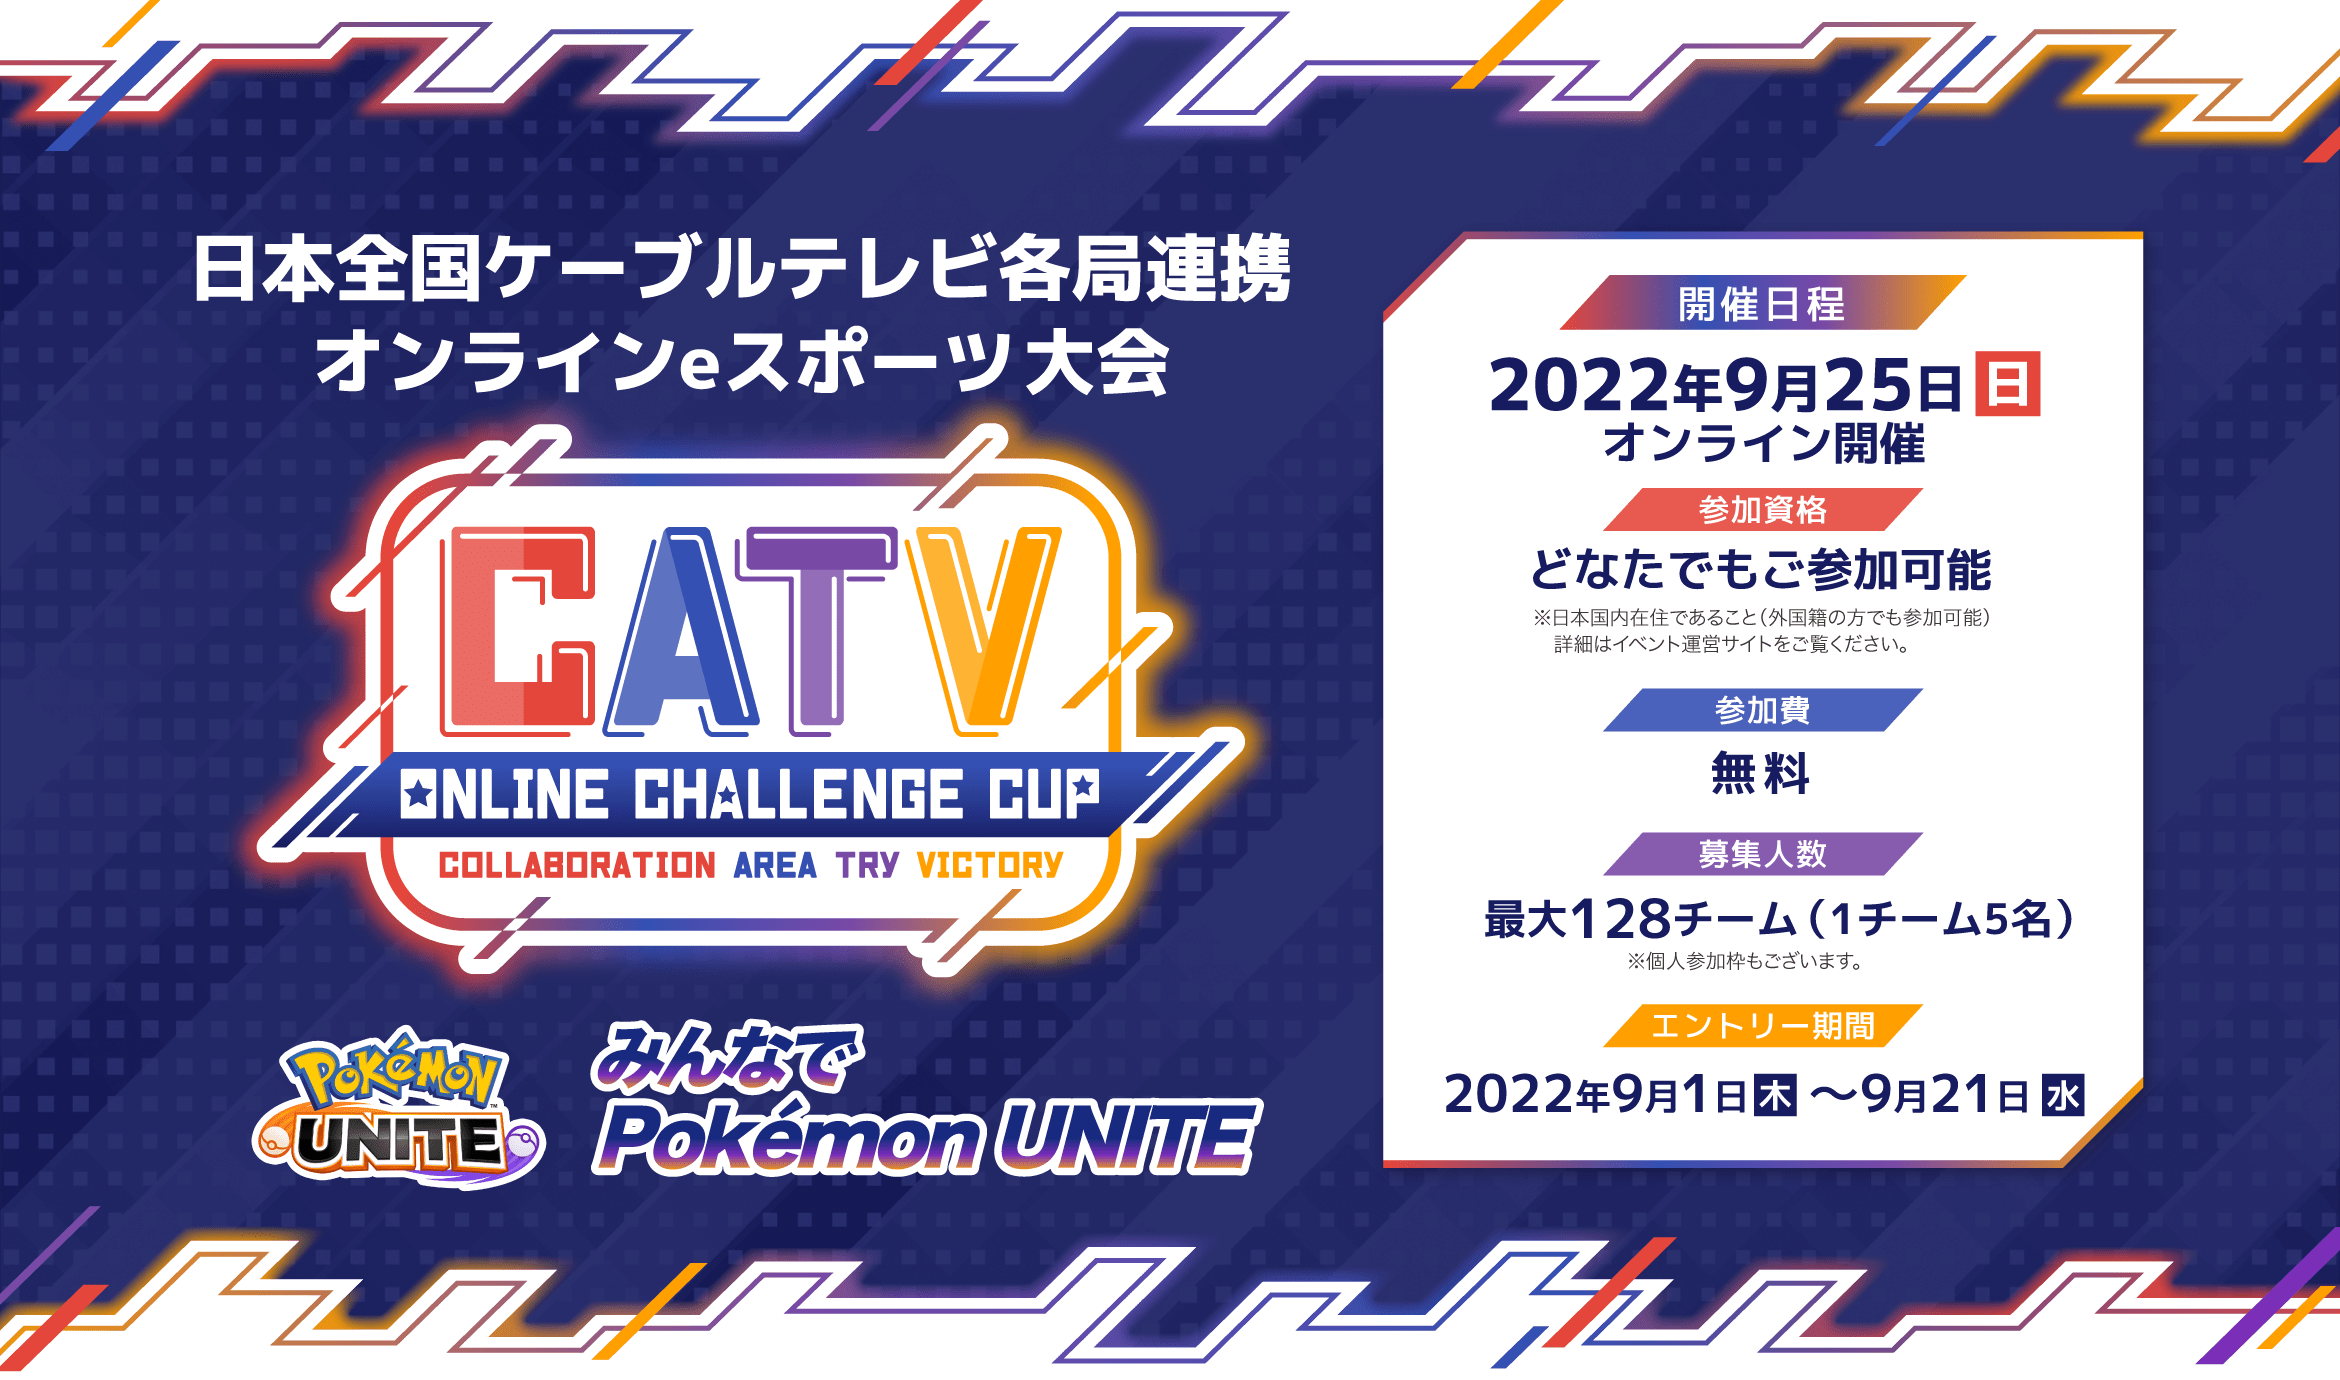 【大会情報】CATV Online Challenge CUP【2022年9月25日】